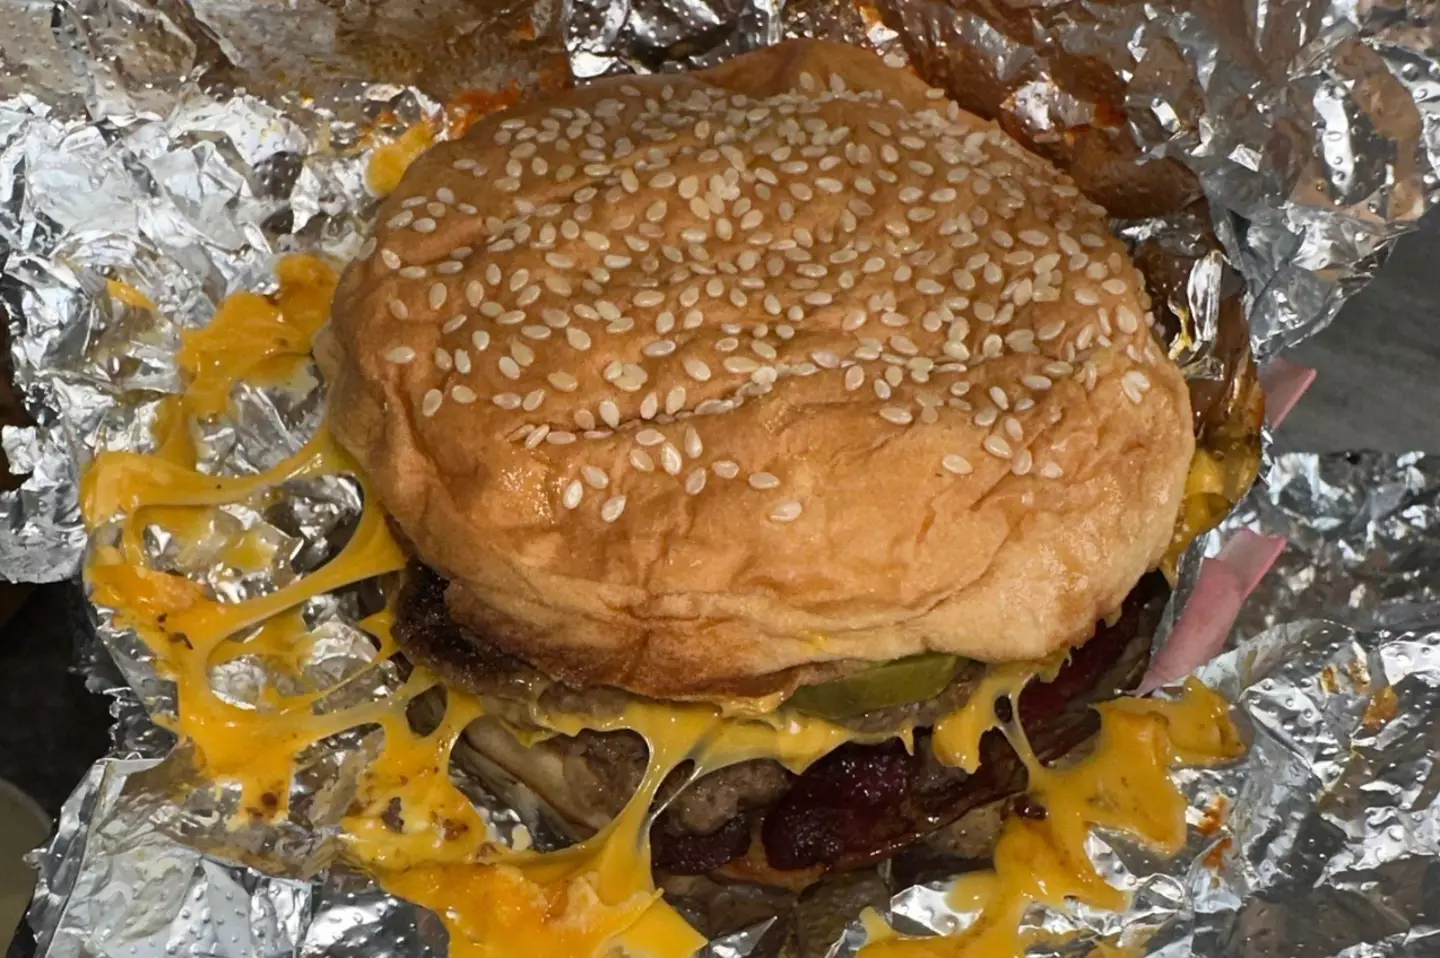 One of Five Guys' signature cheeseburgers.